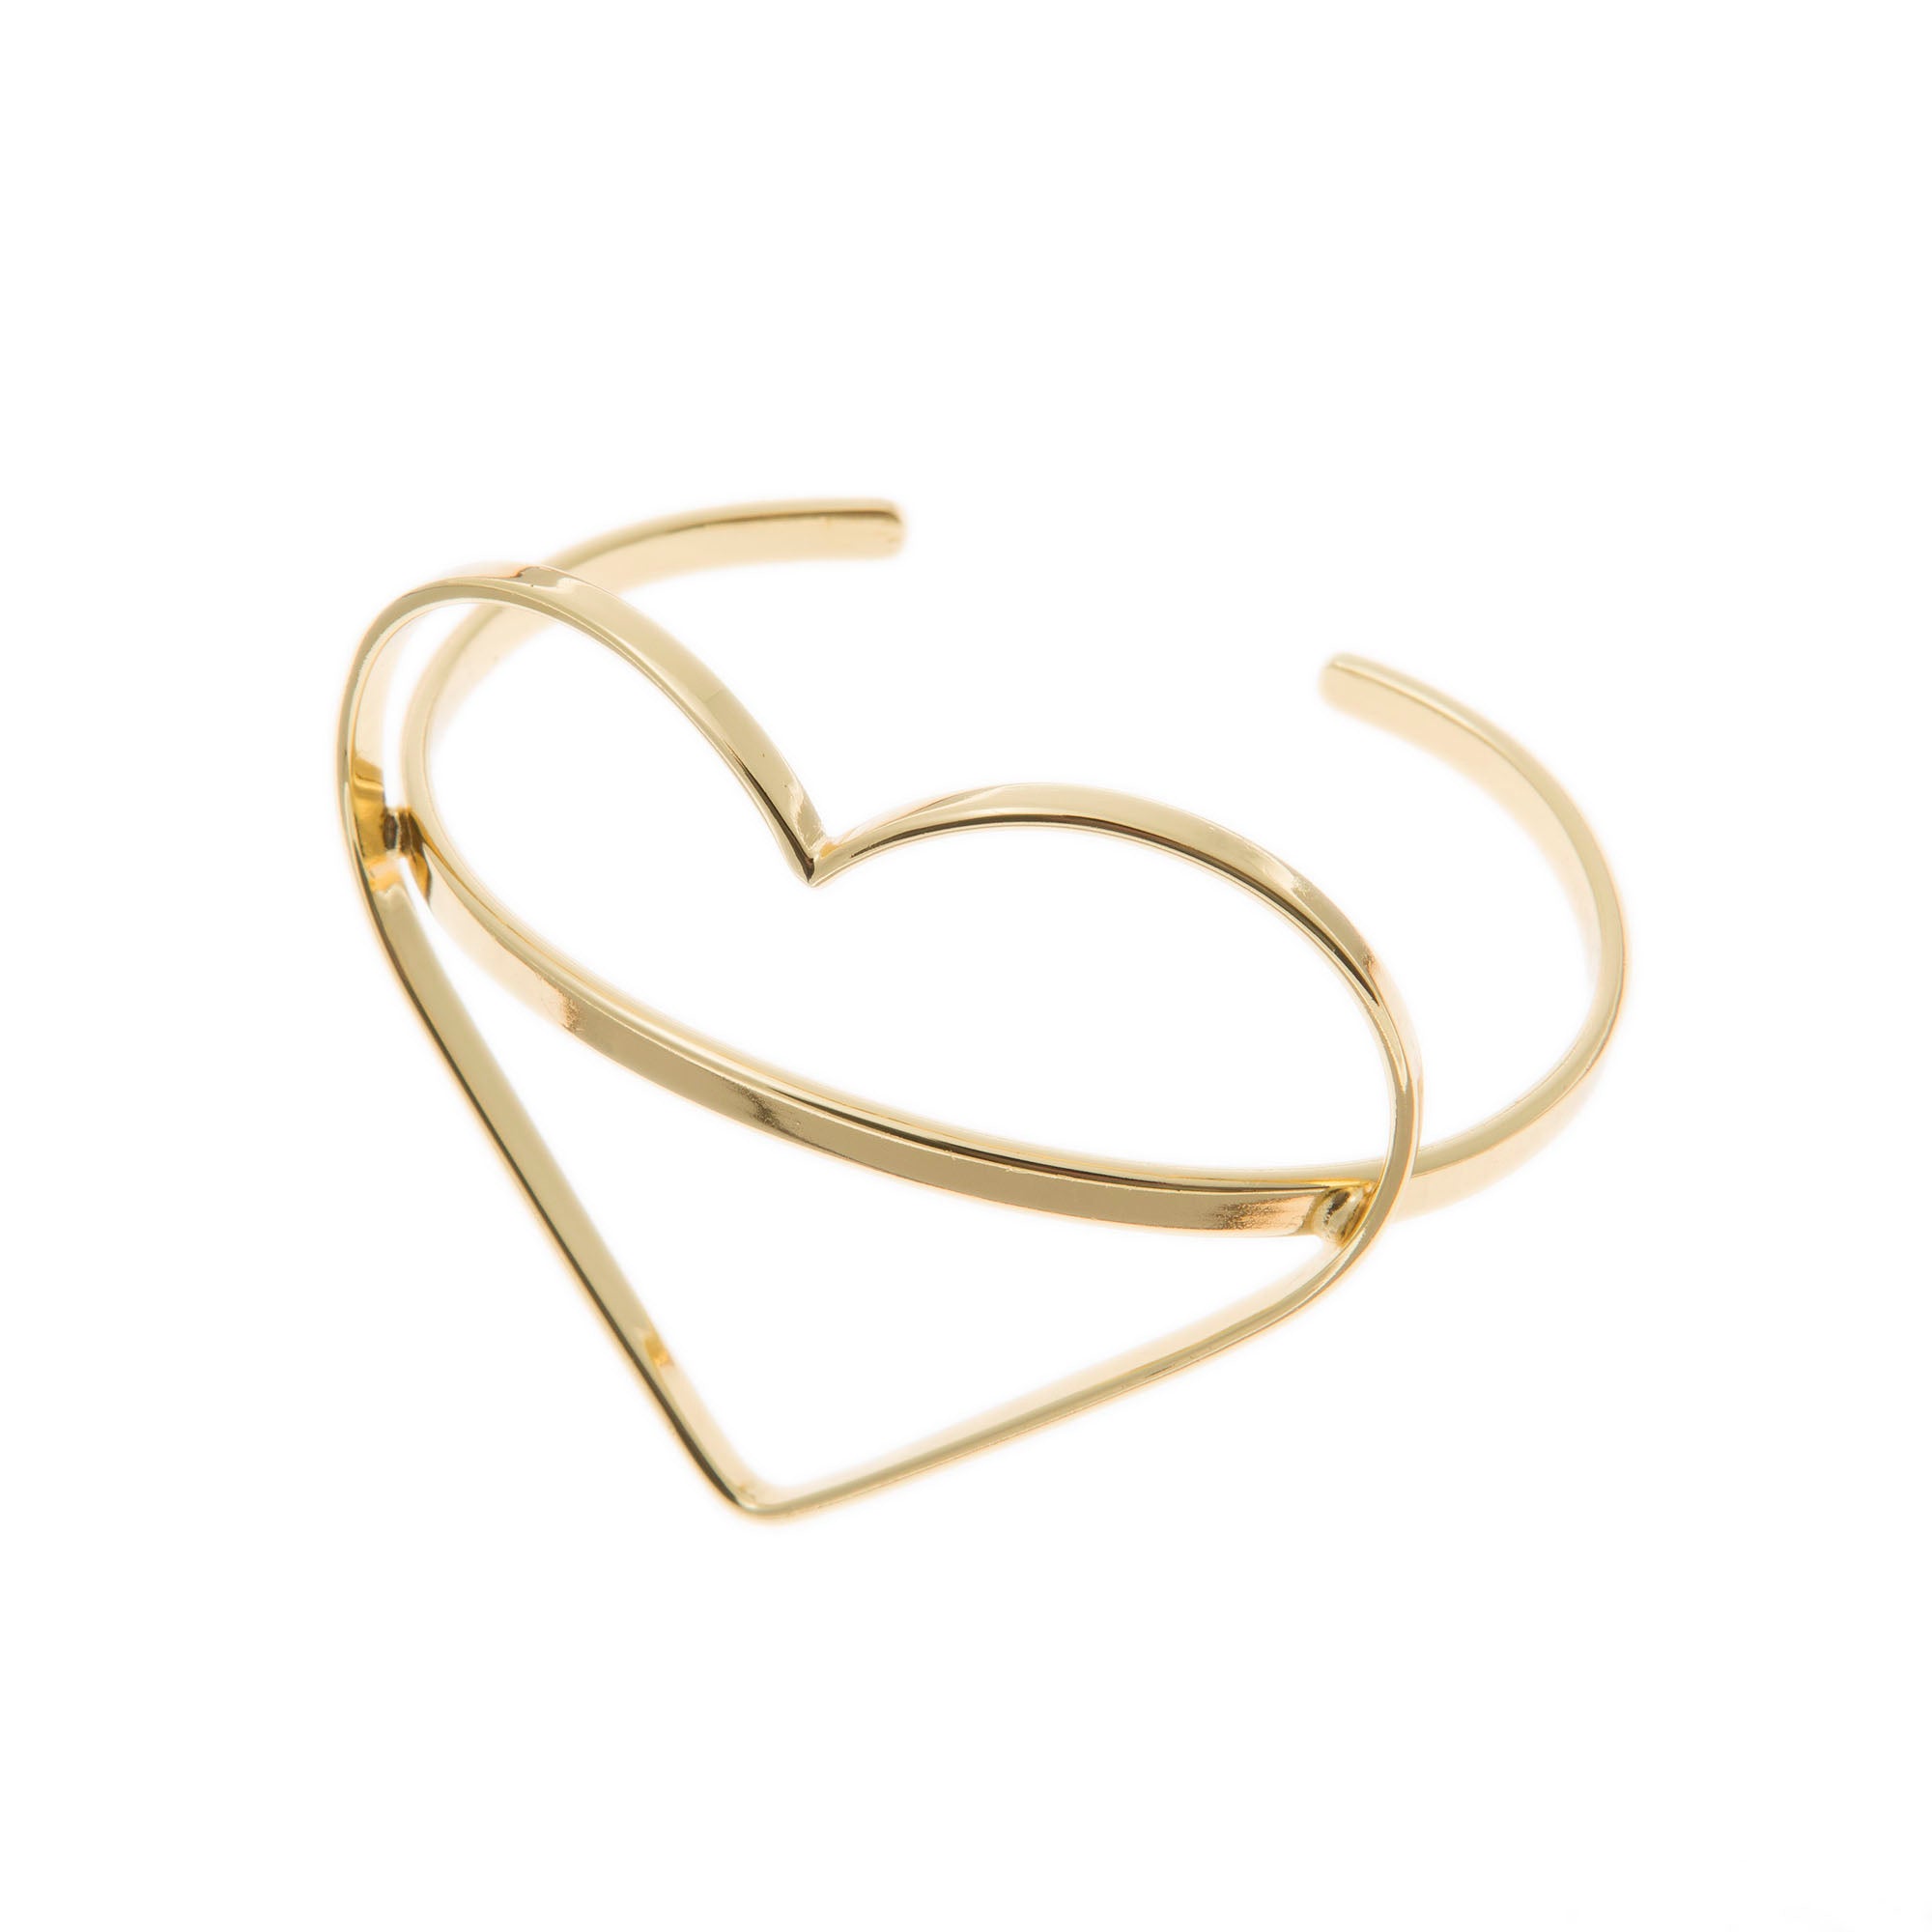 Bracelets | Gold, Silver & Statement Heart Accessories | SEEME.ORG ...